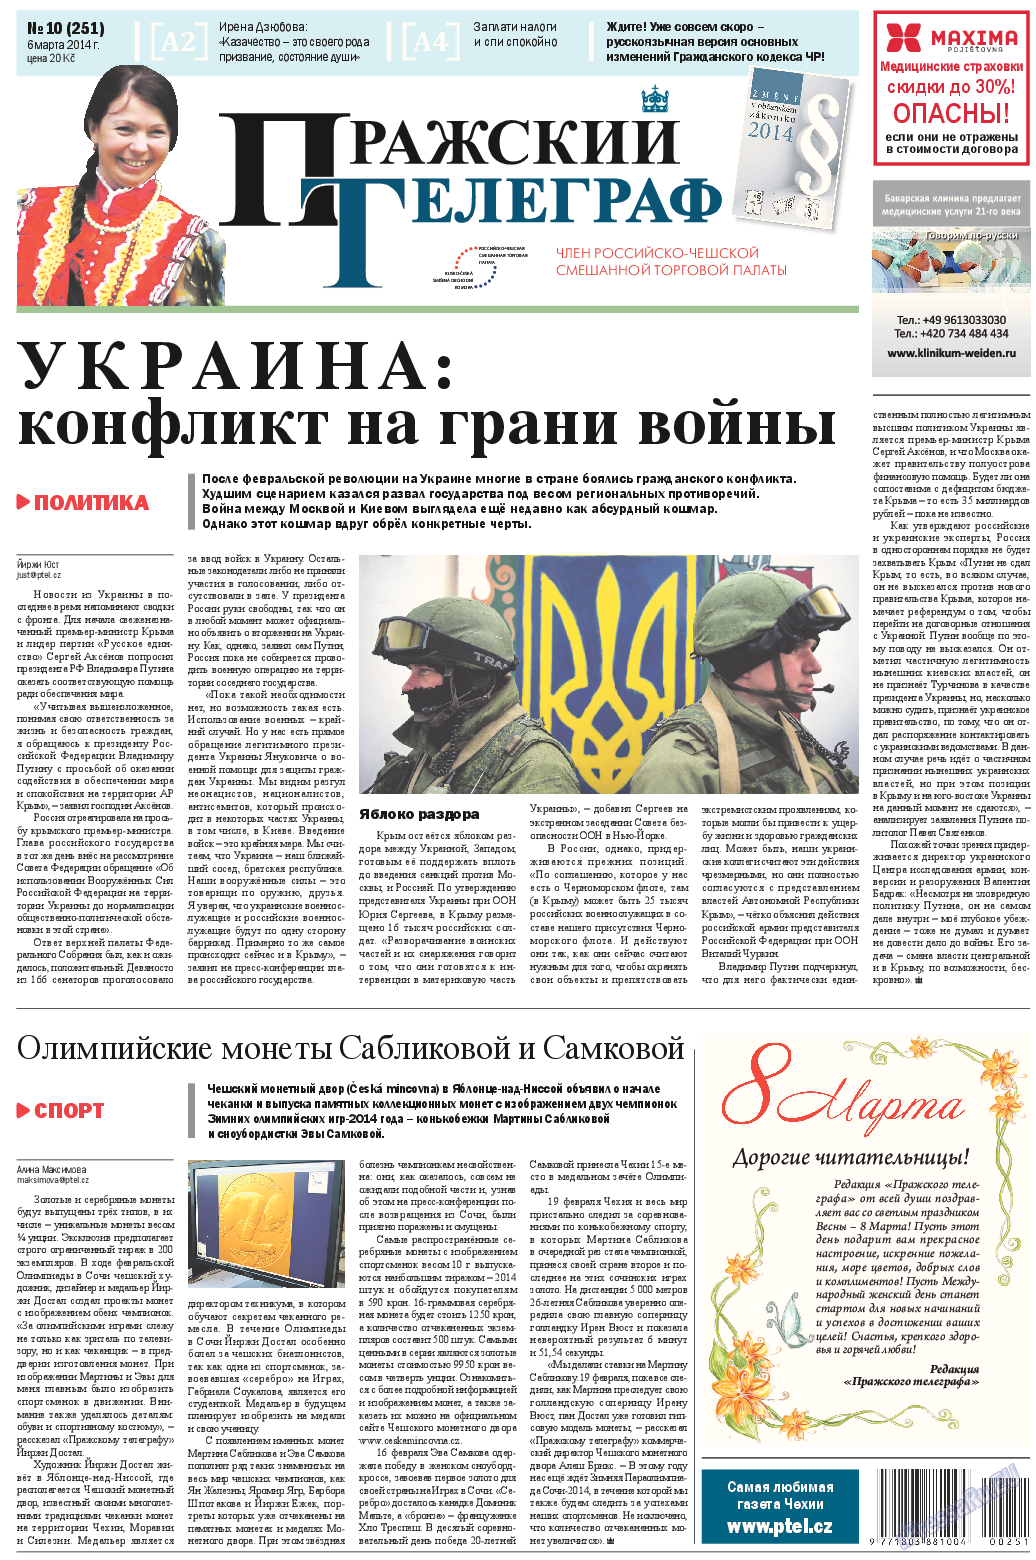 Пражский телеграф, газета. 2014 №10 стр.1